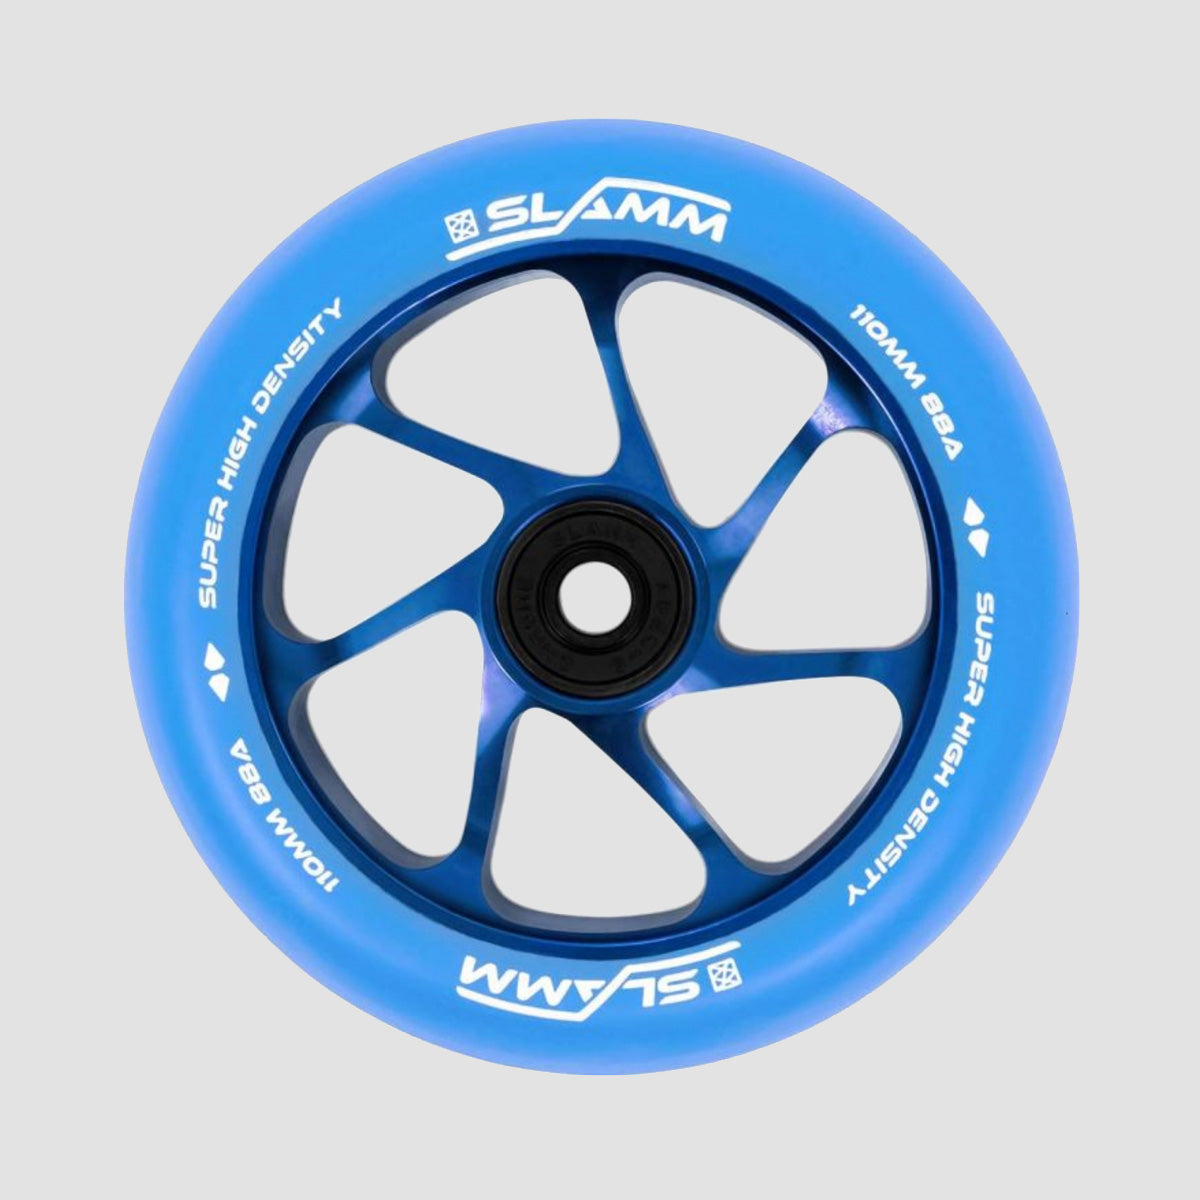 Slamm Team Wheel x1 Blue/Blue 110mm